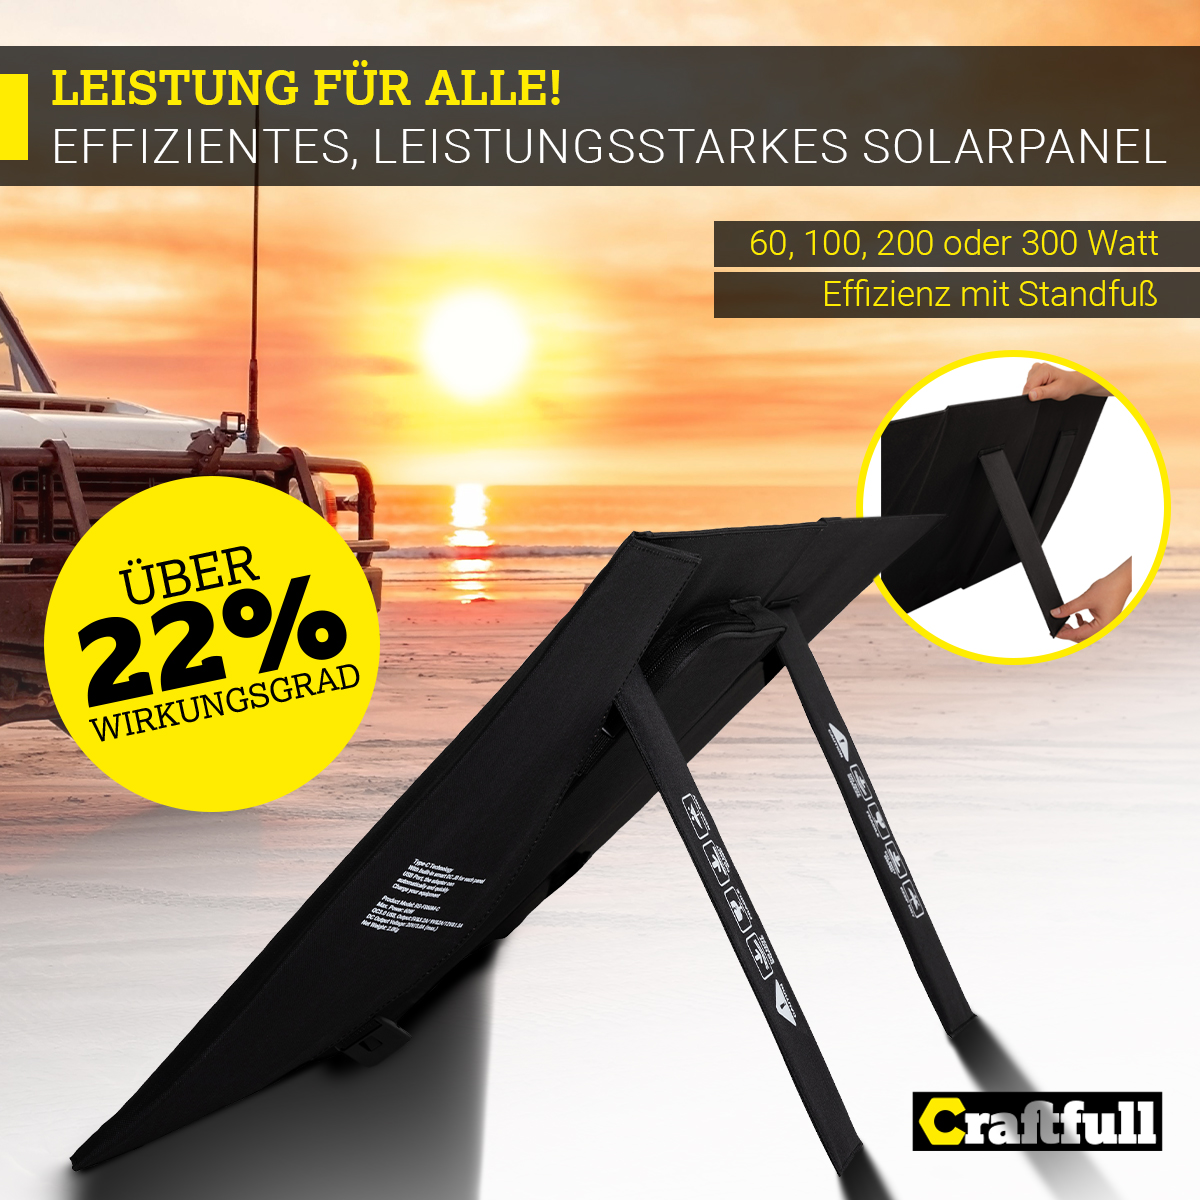 Solartasche CRAFTFULL Solarpanel Sunbalance